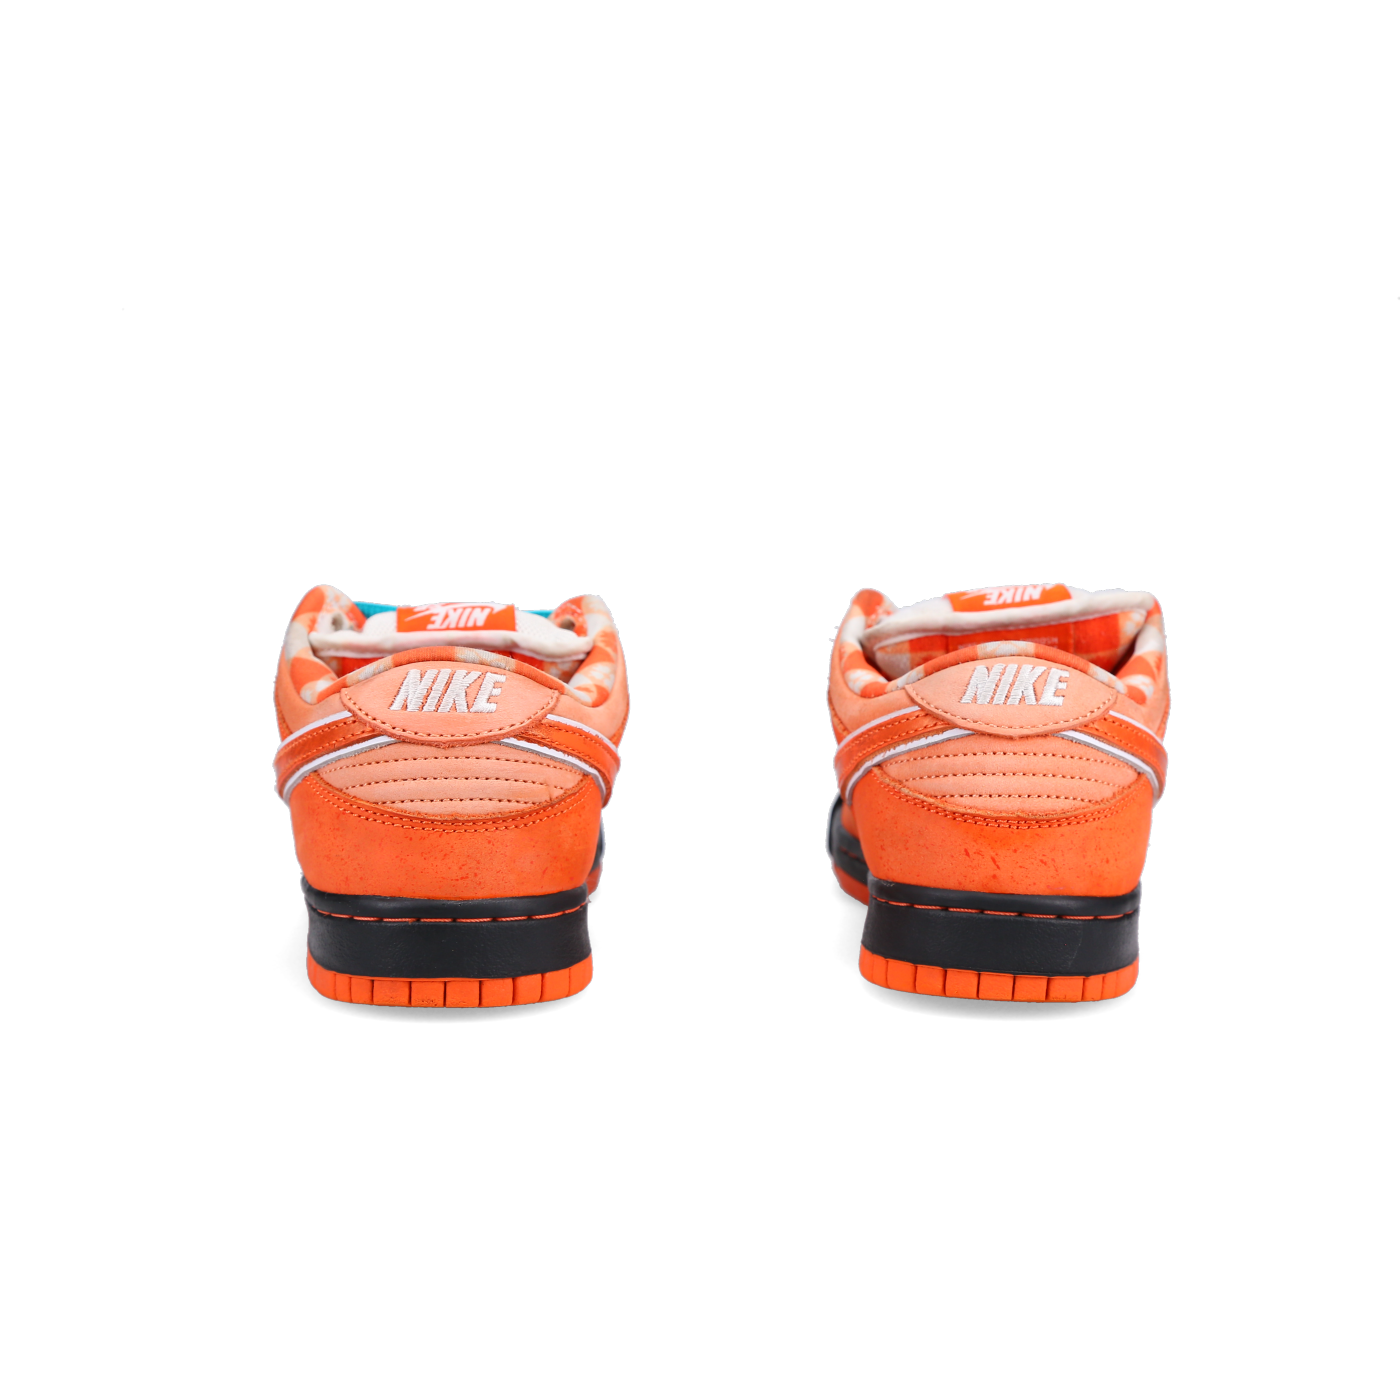 Concepts X Nike SB Dunk Low 'Orange Lobster'